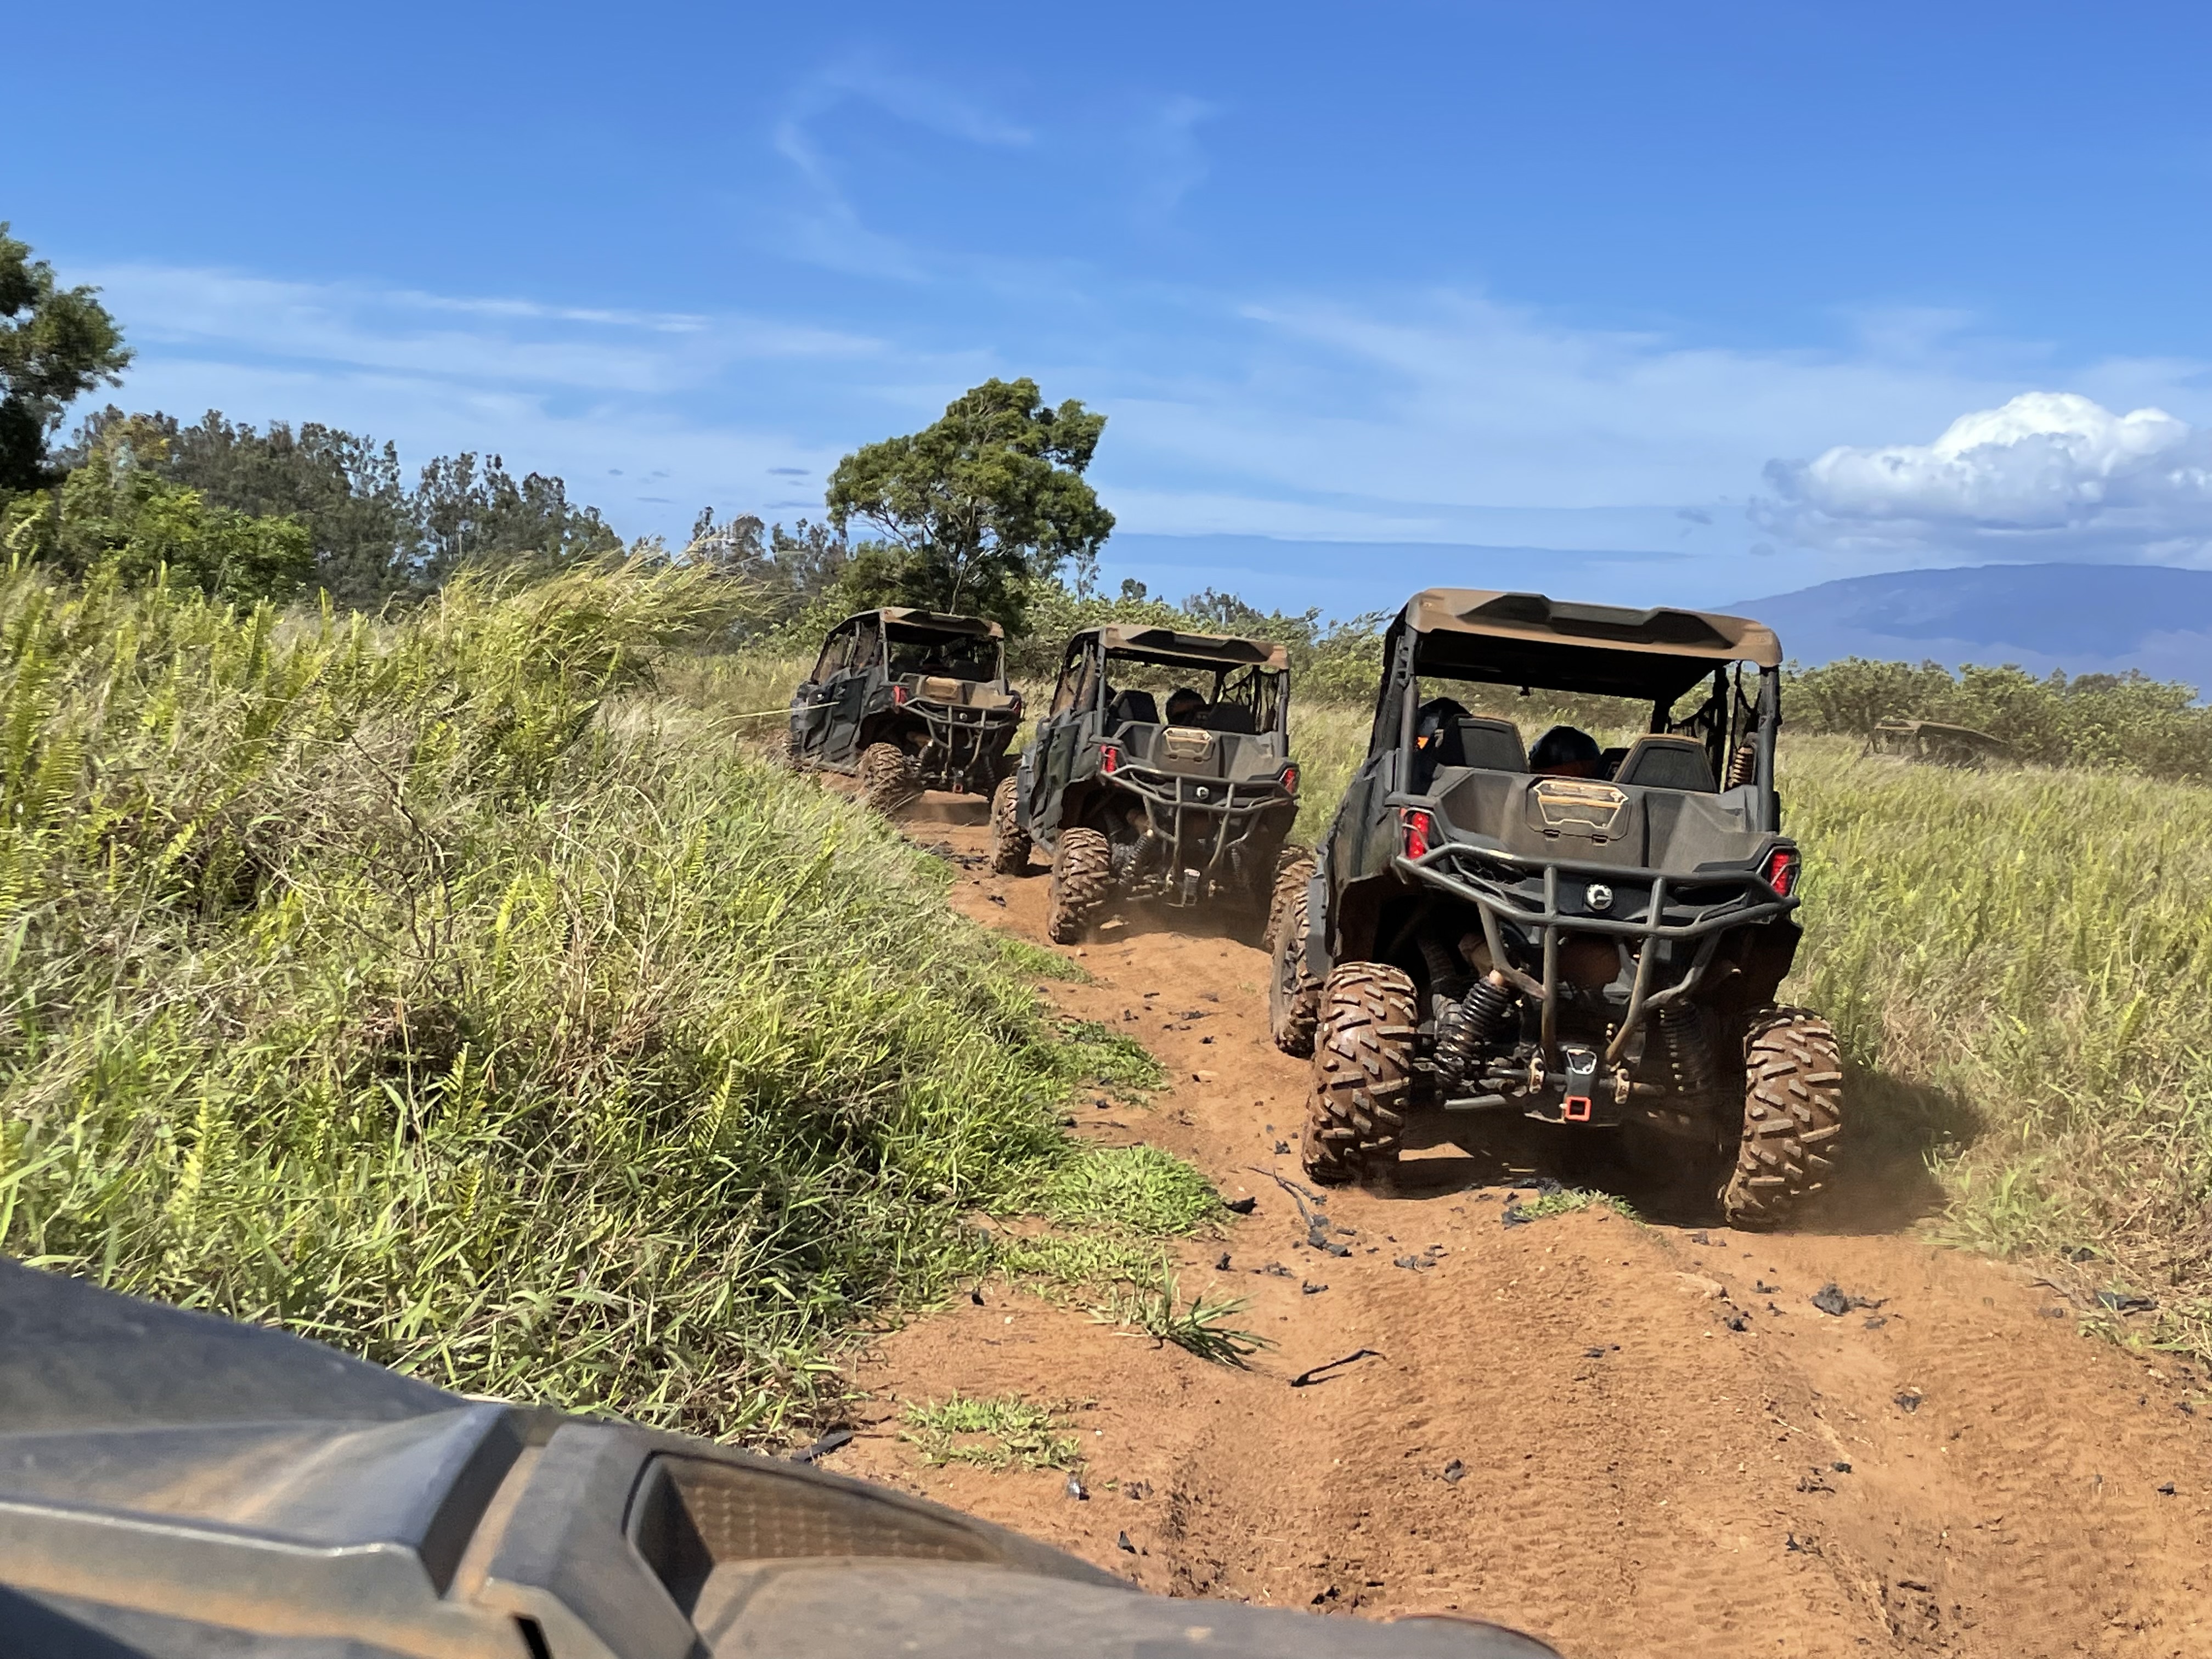 ATVs on Maui island with a blue sky and rugged terrain